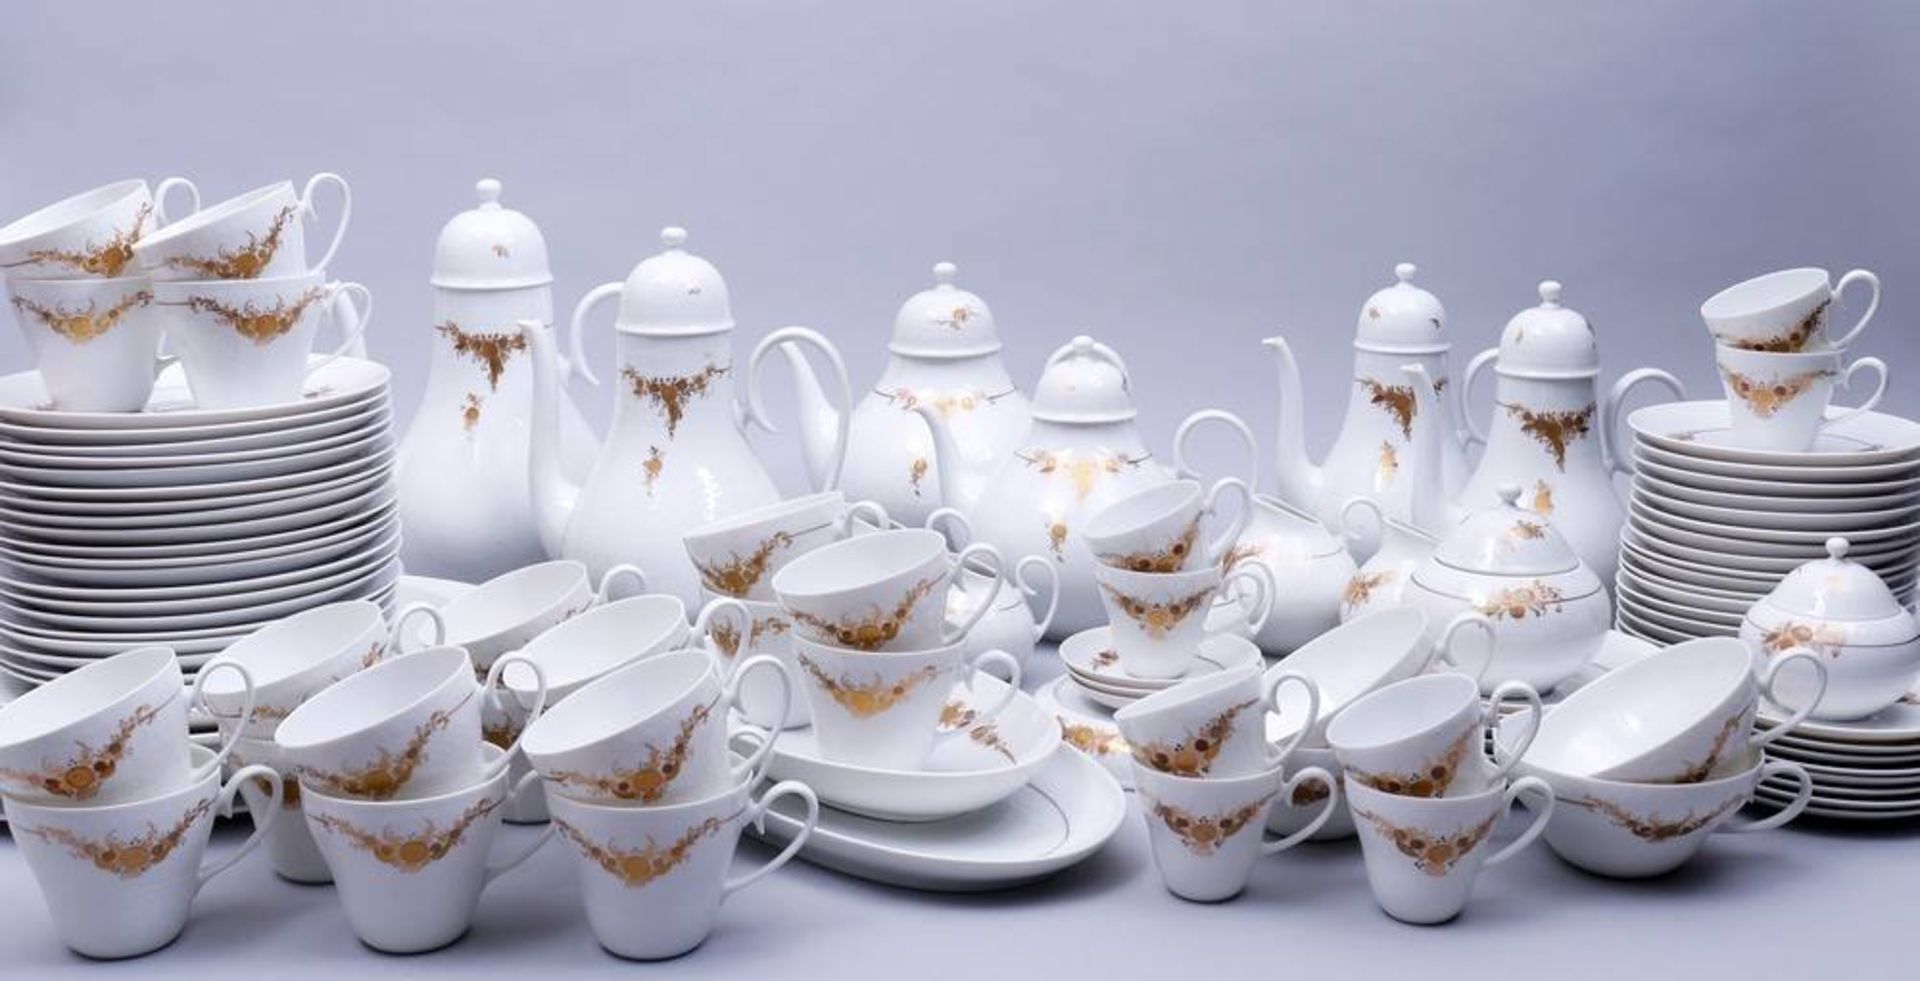 Extensive coffee/tea service Design Björn Wiinblad for Rosenthal, 20th C., decor "Quatre